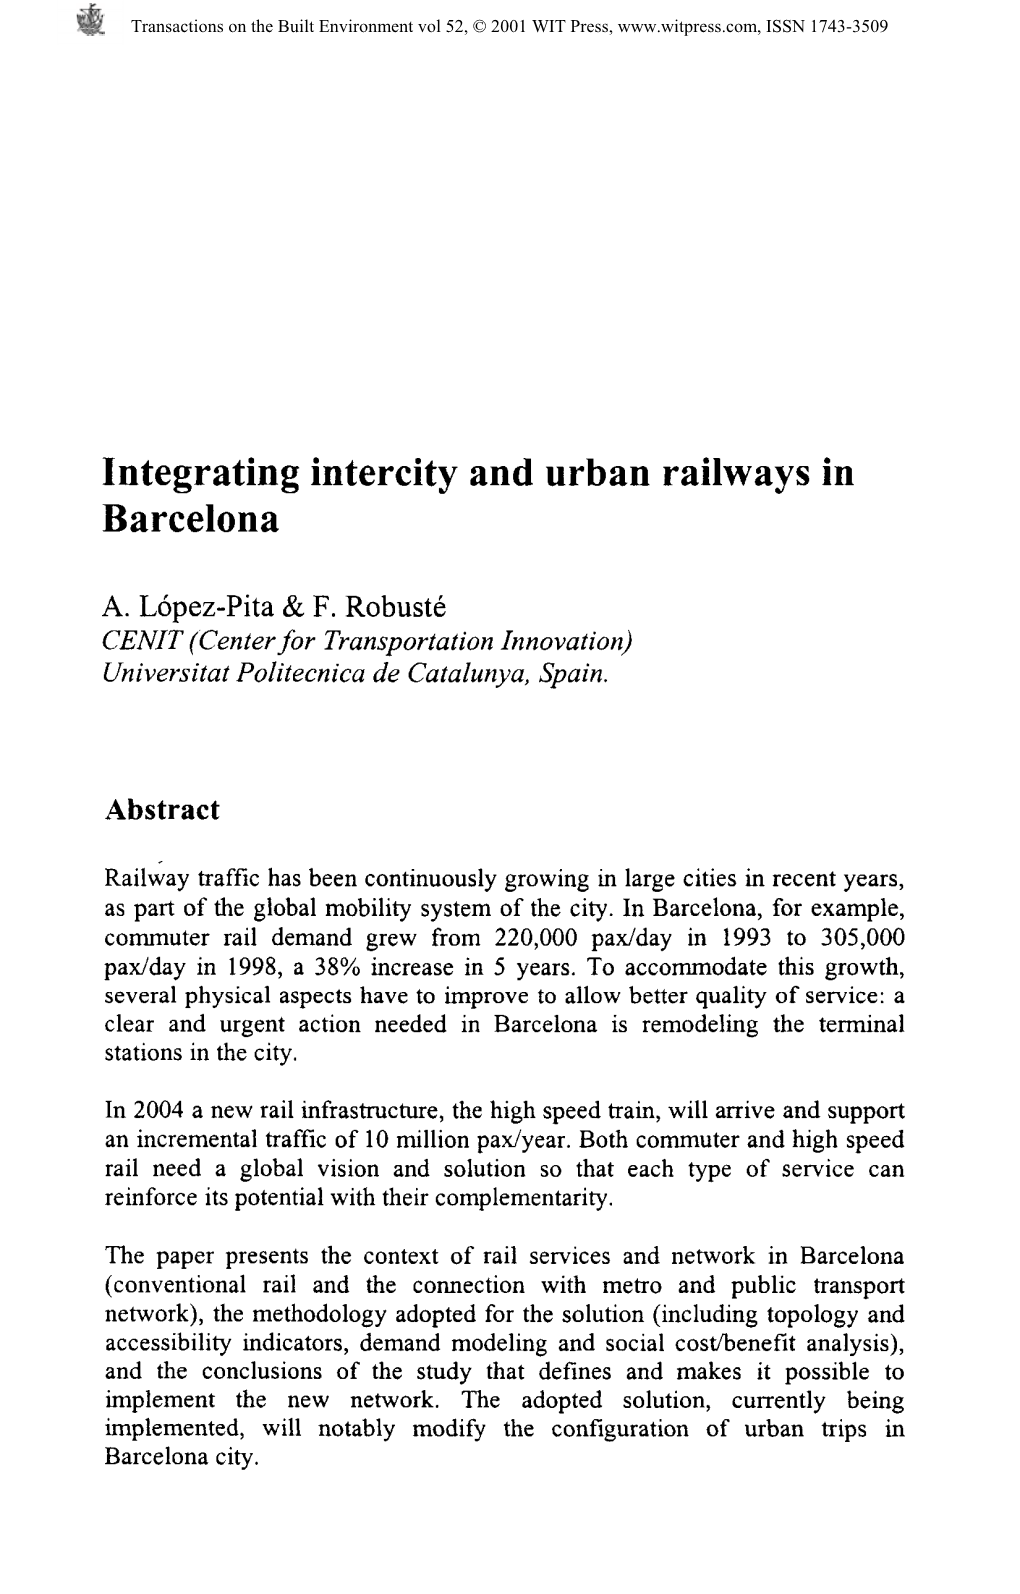 Integrating Intercity and Urban Railways in Barcelona